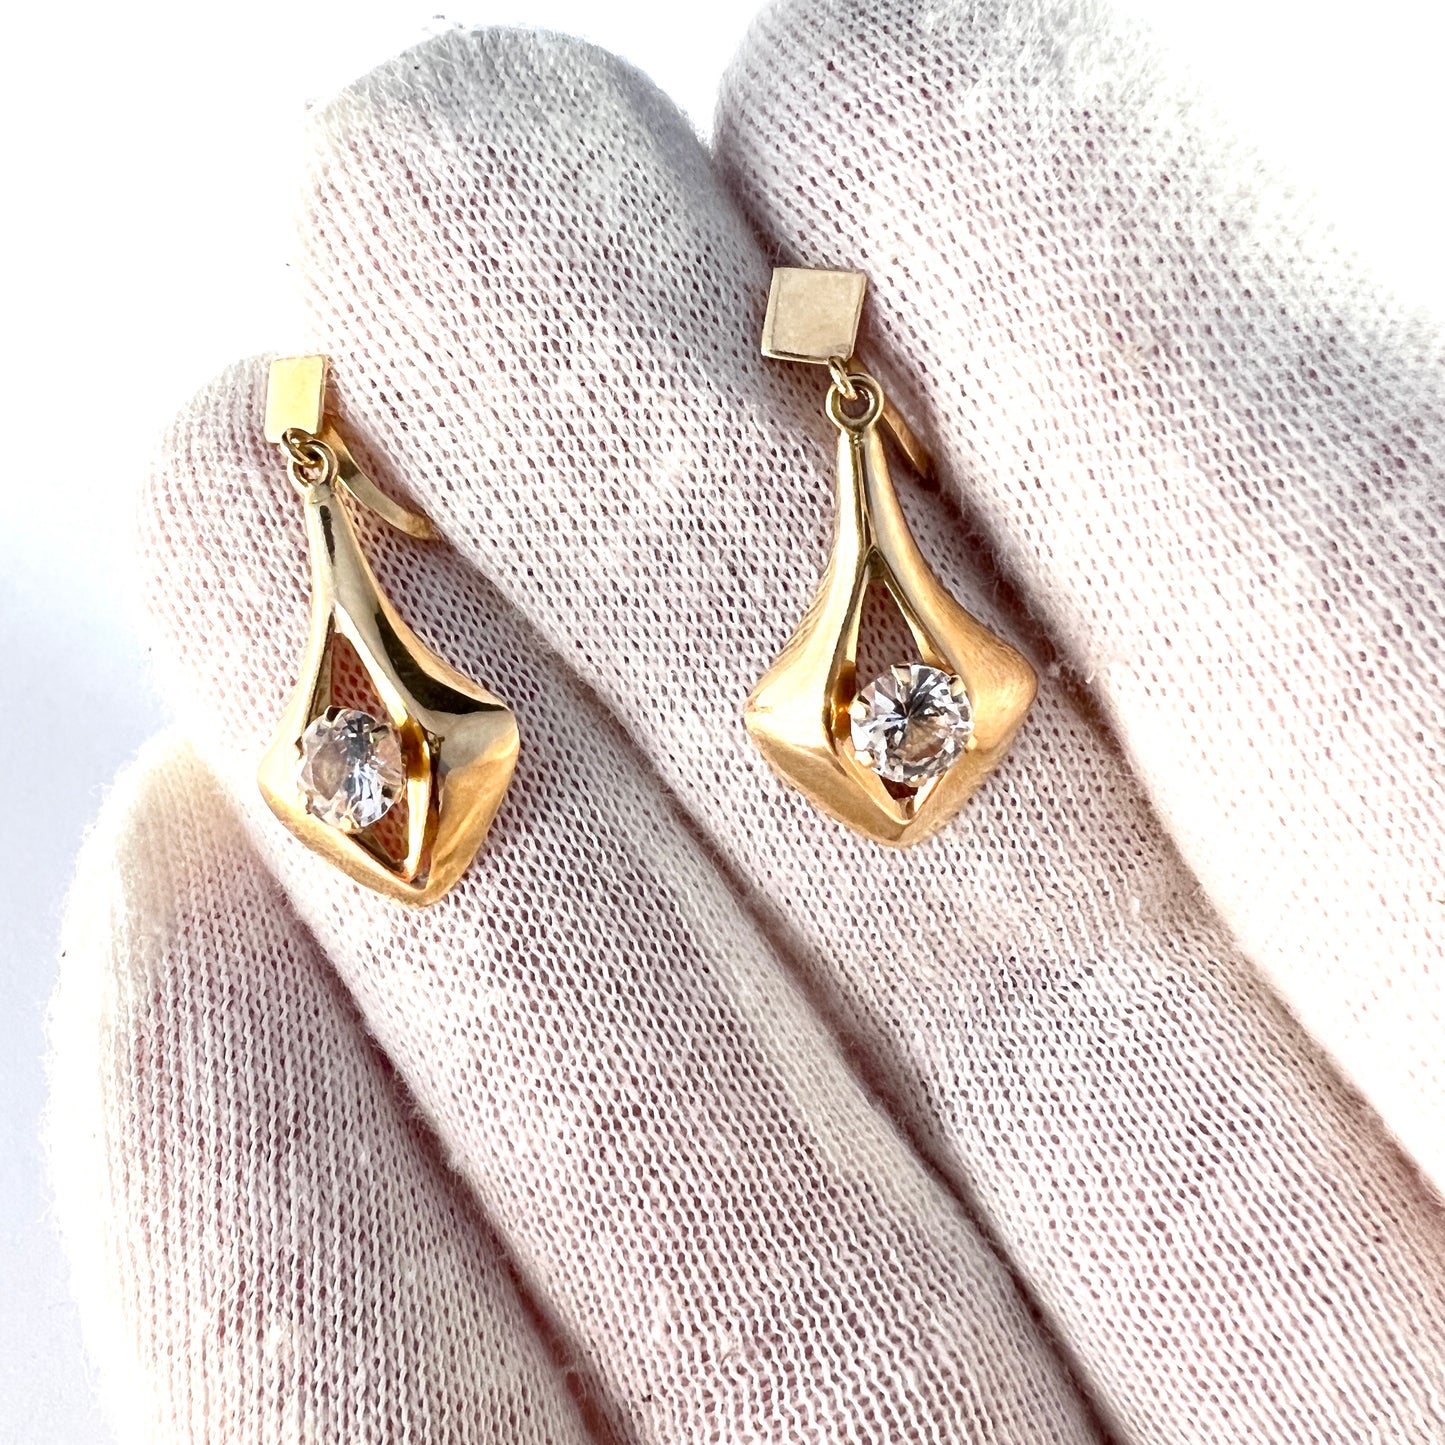 Alton, Sweden 1968. Vintage 18k Gold Rock Crystal Earrings.